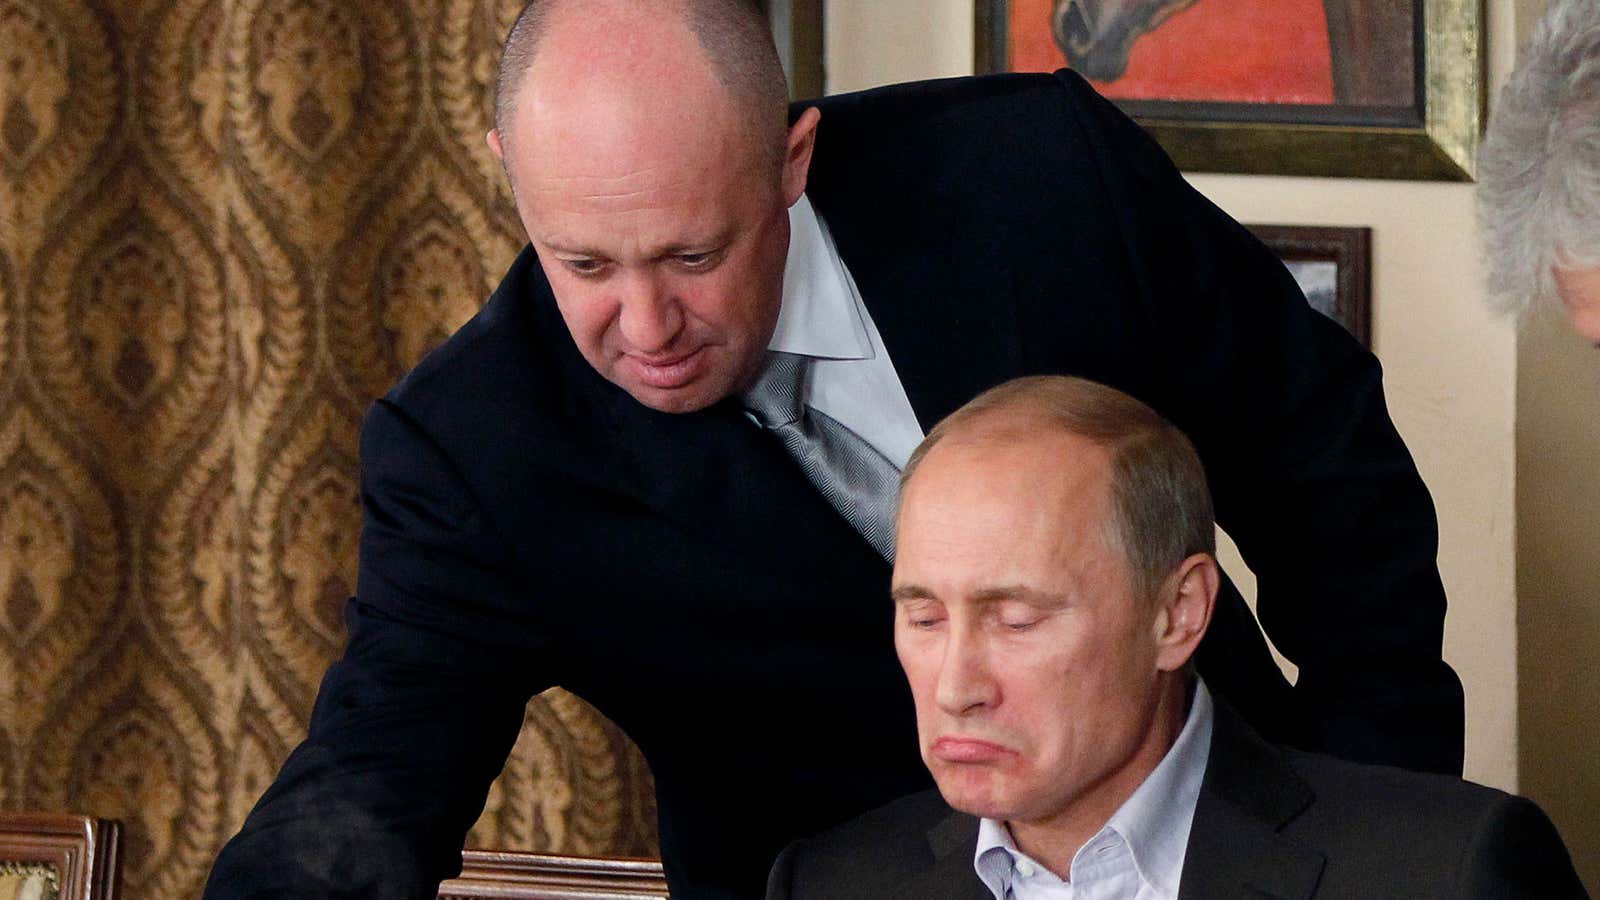 Russian president Vladimir Putin with oligarch Yevgeny Prigozhin, who funded Russia’s troll farm.